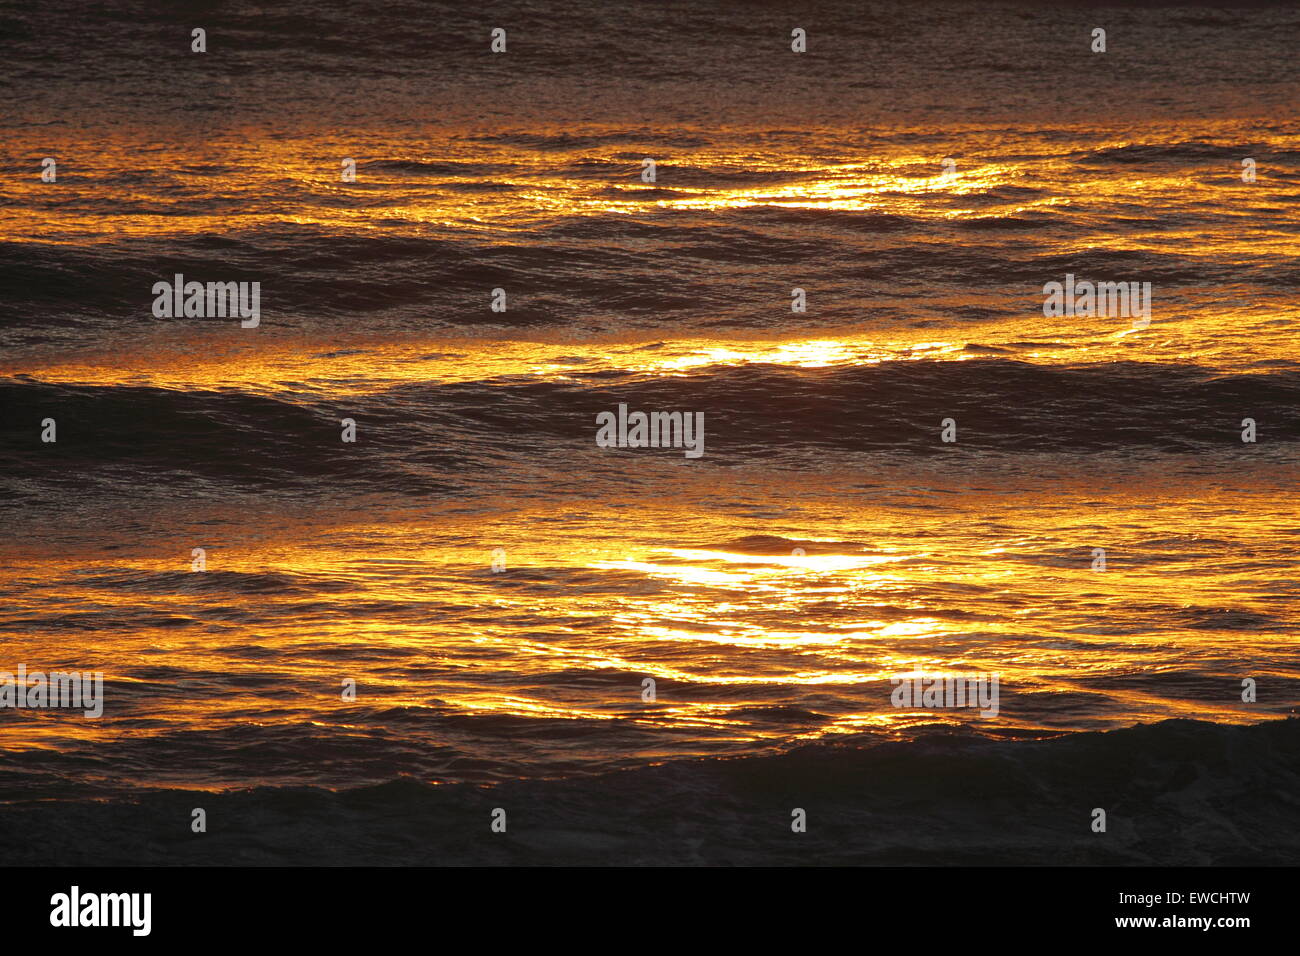 A golden glow baths early morning swell off Alexandra Headland on the Sunshine Coast of Queensland, Australia. Stock Photo